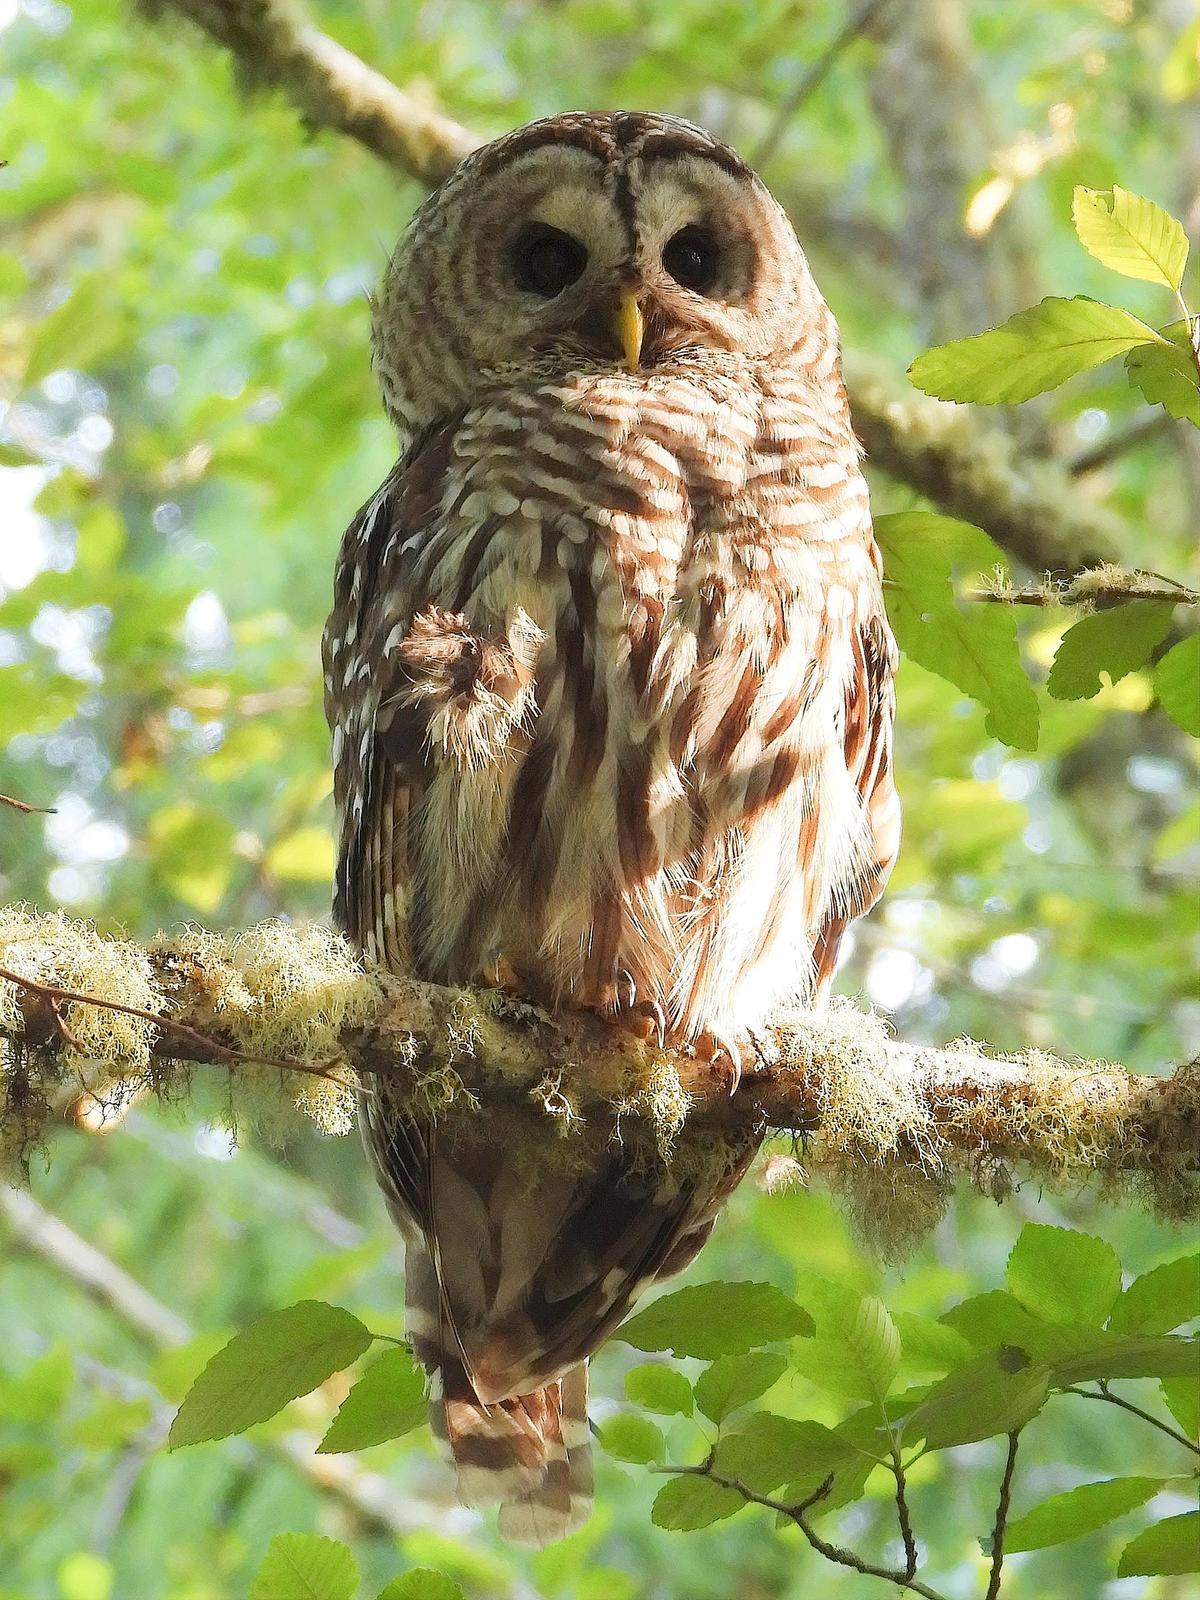 Barred Owl Photo by Dan Tallman